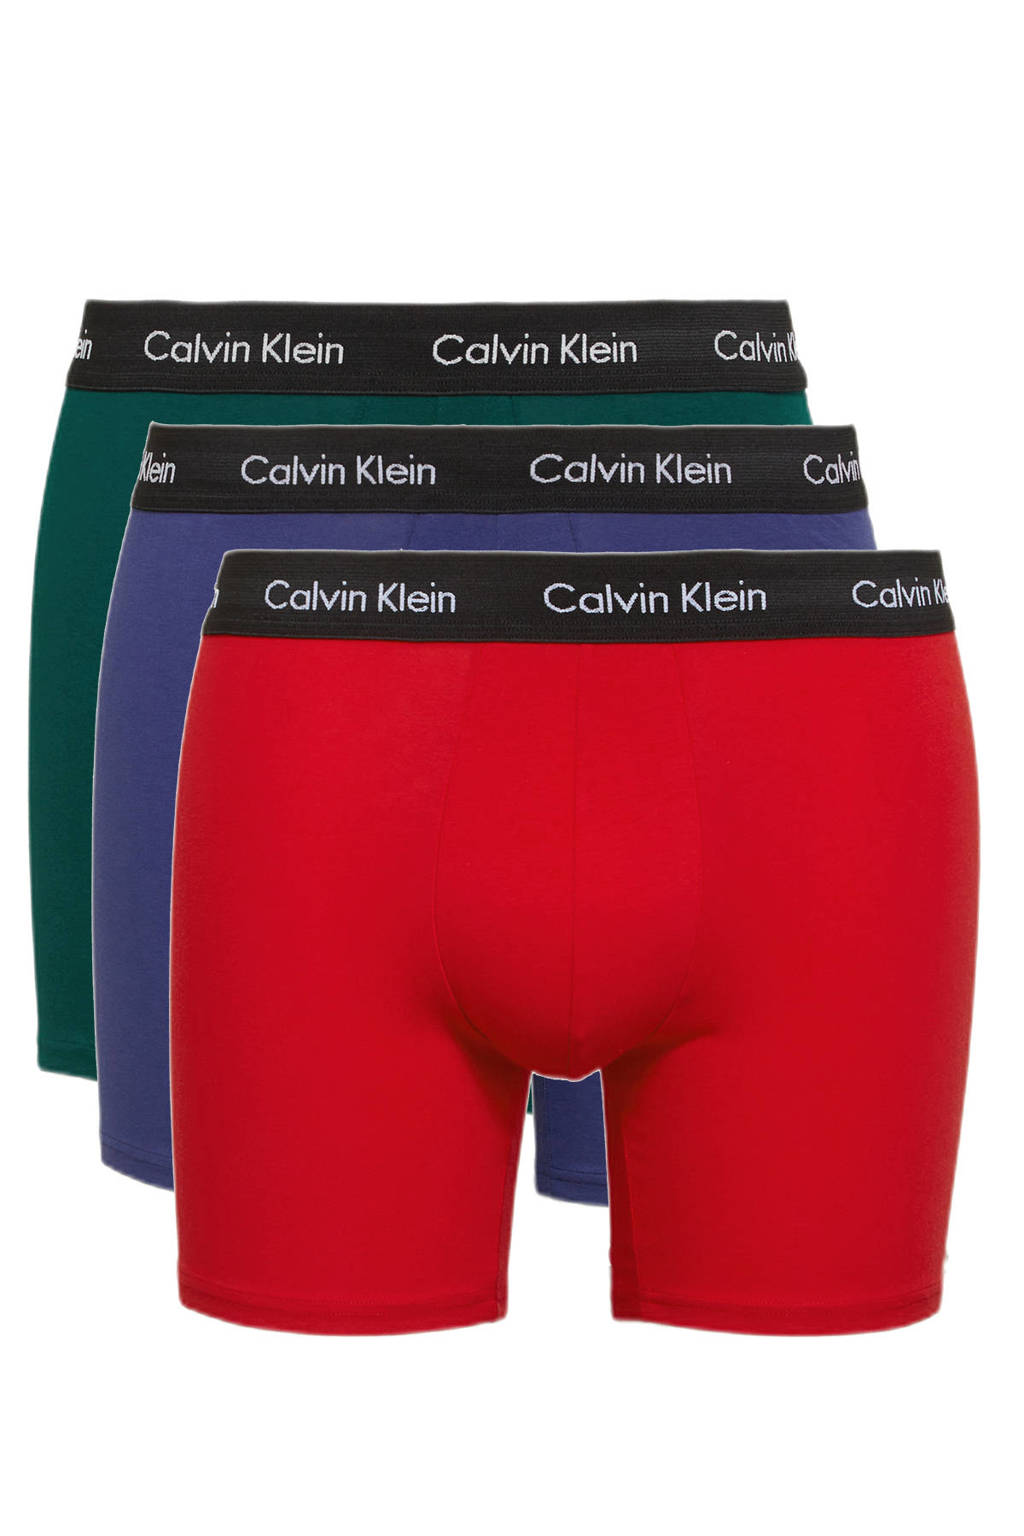 CALVIN KLEIN UNDERWEAR boxershort (set van 3), Rood/blauw/groen